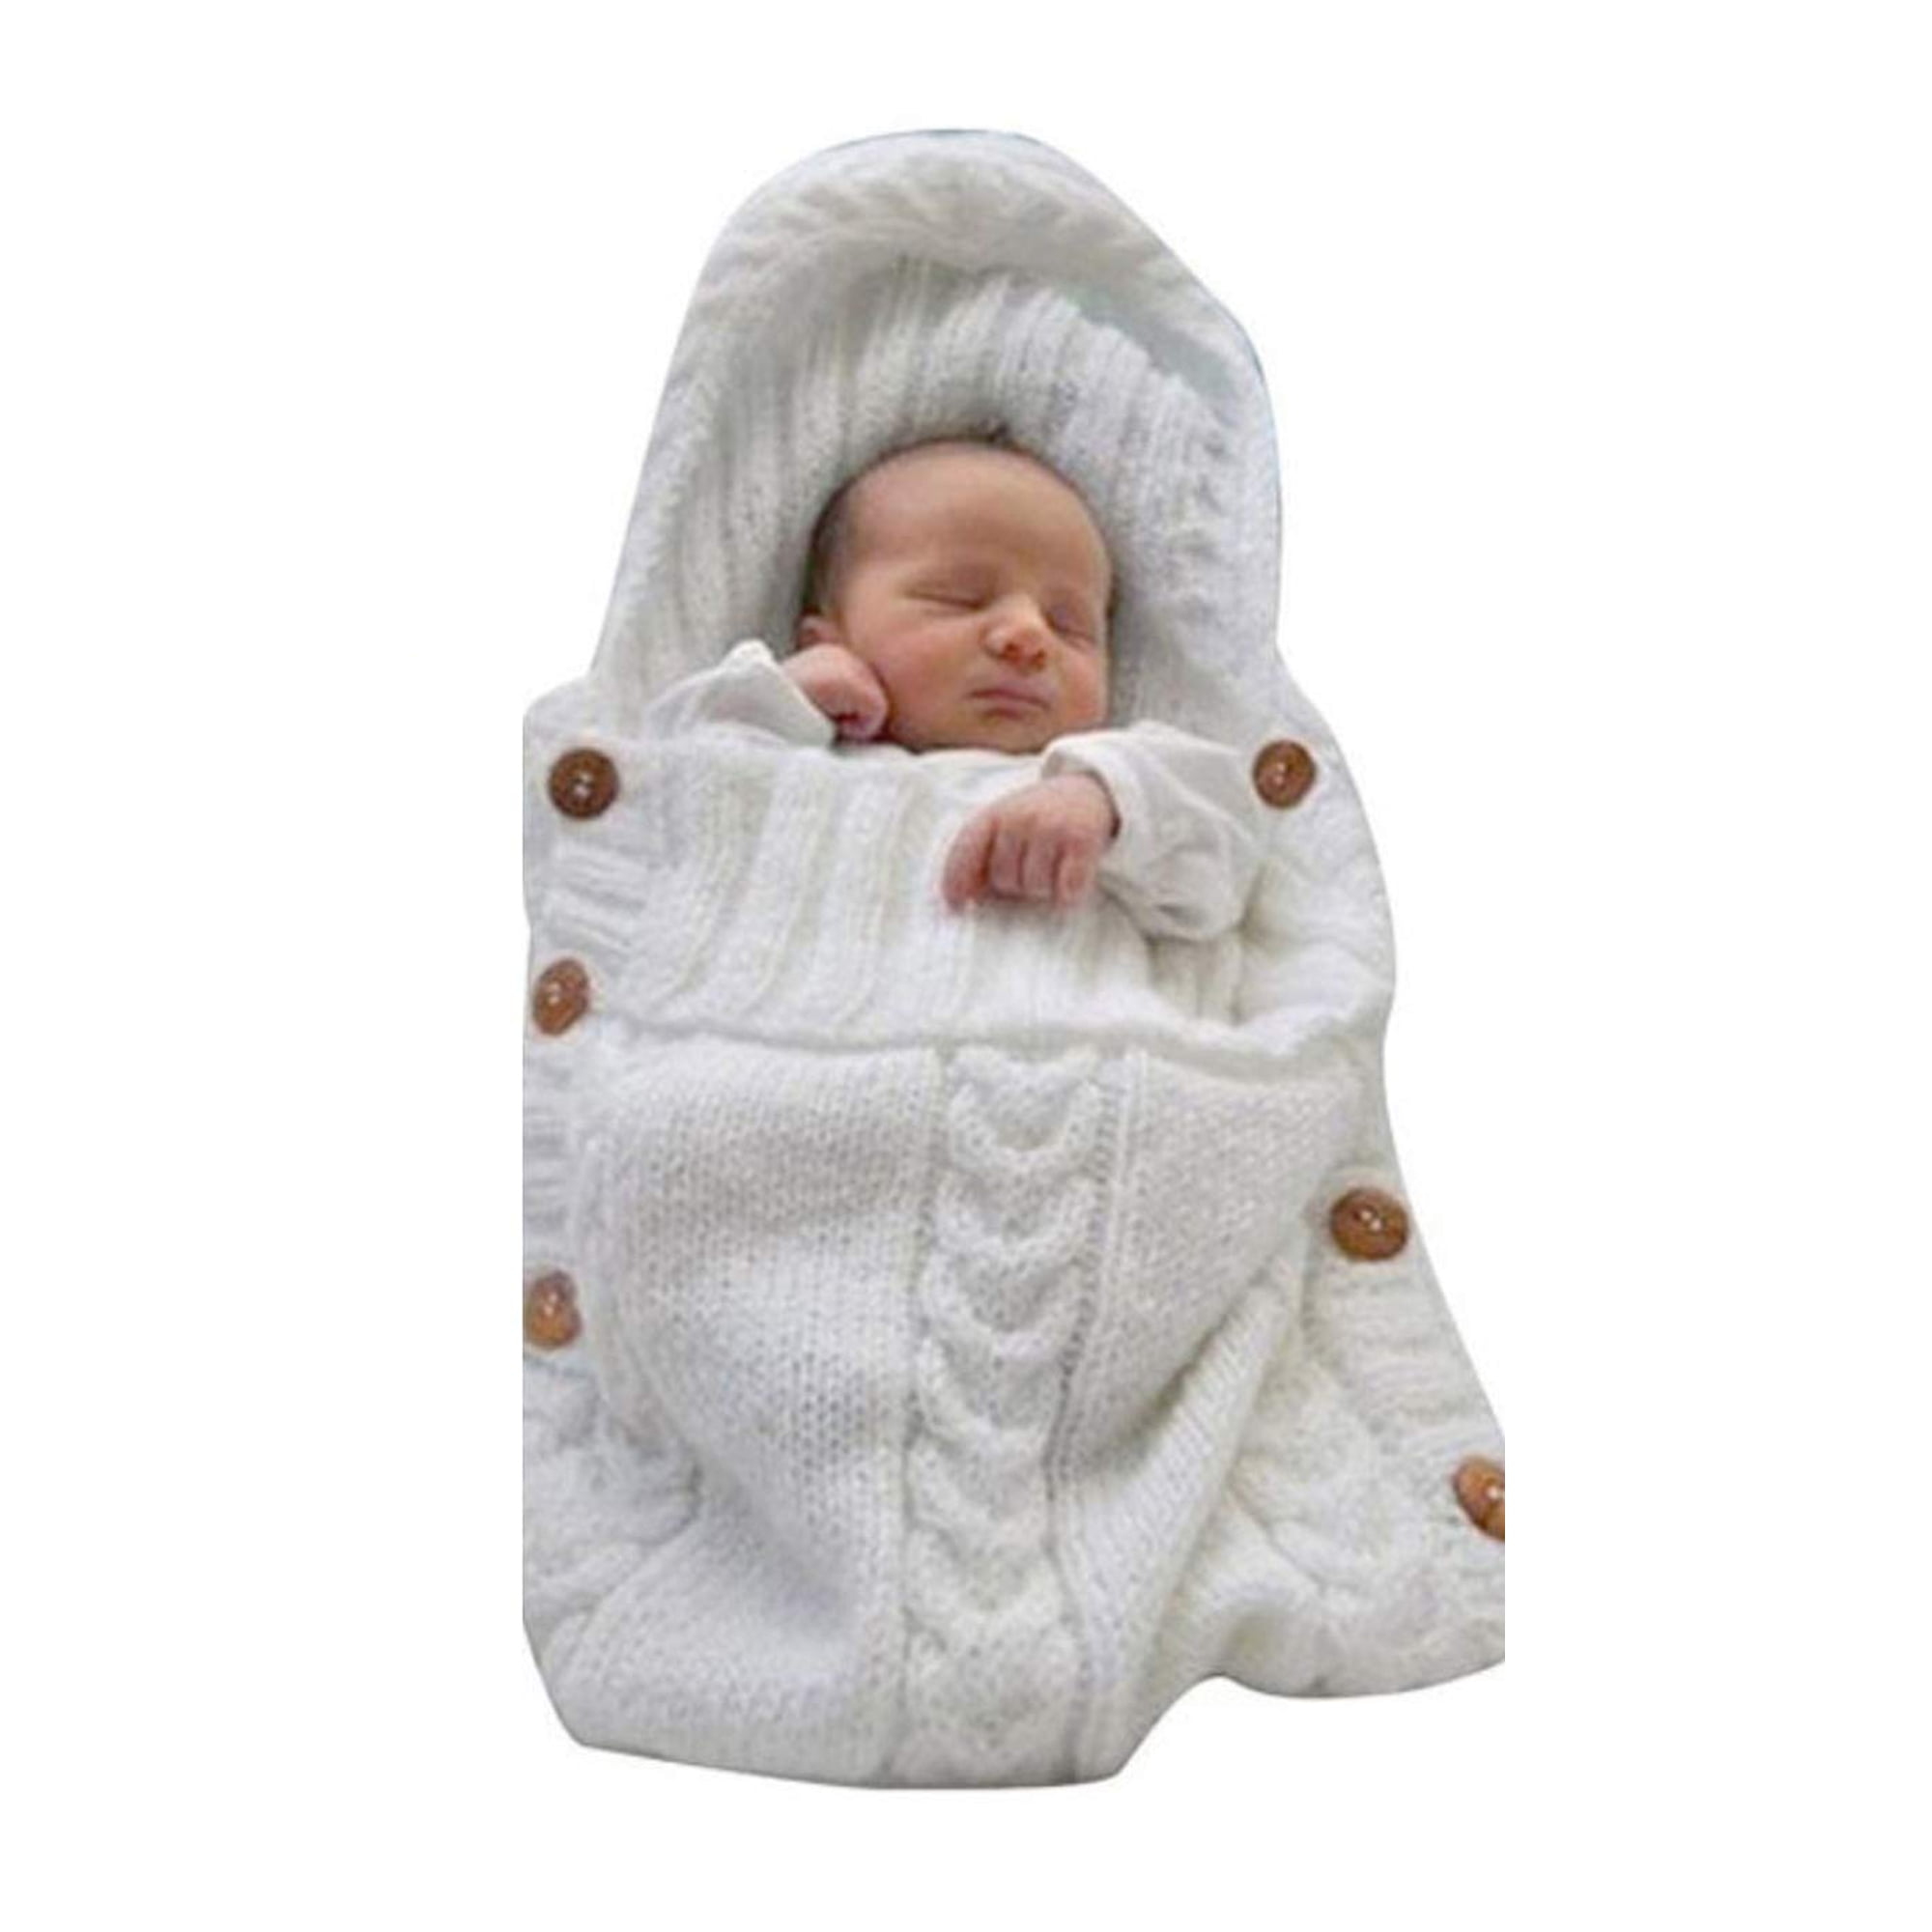 Newborn Infant Baby Boy Girl Blanket Knit Crochet Warm Swaddle Wrap Sleeping Bag 